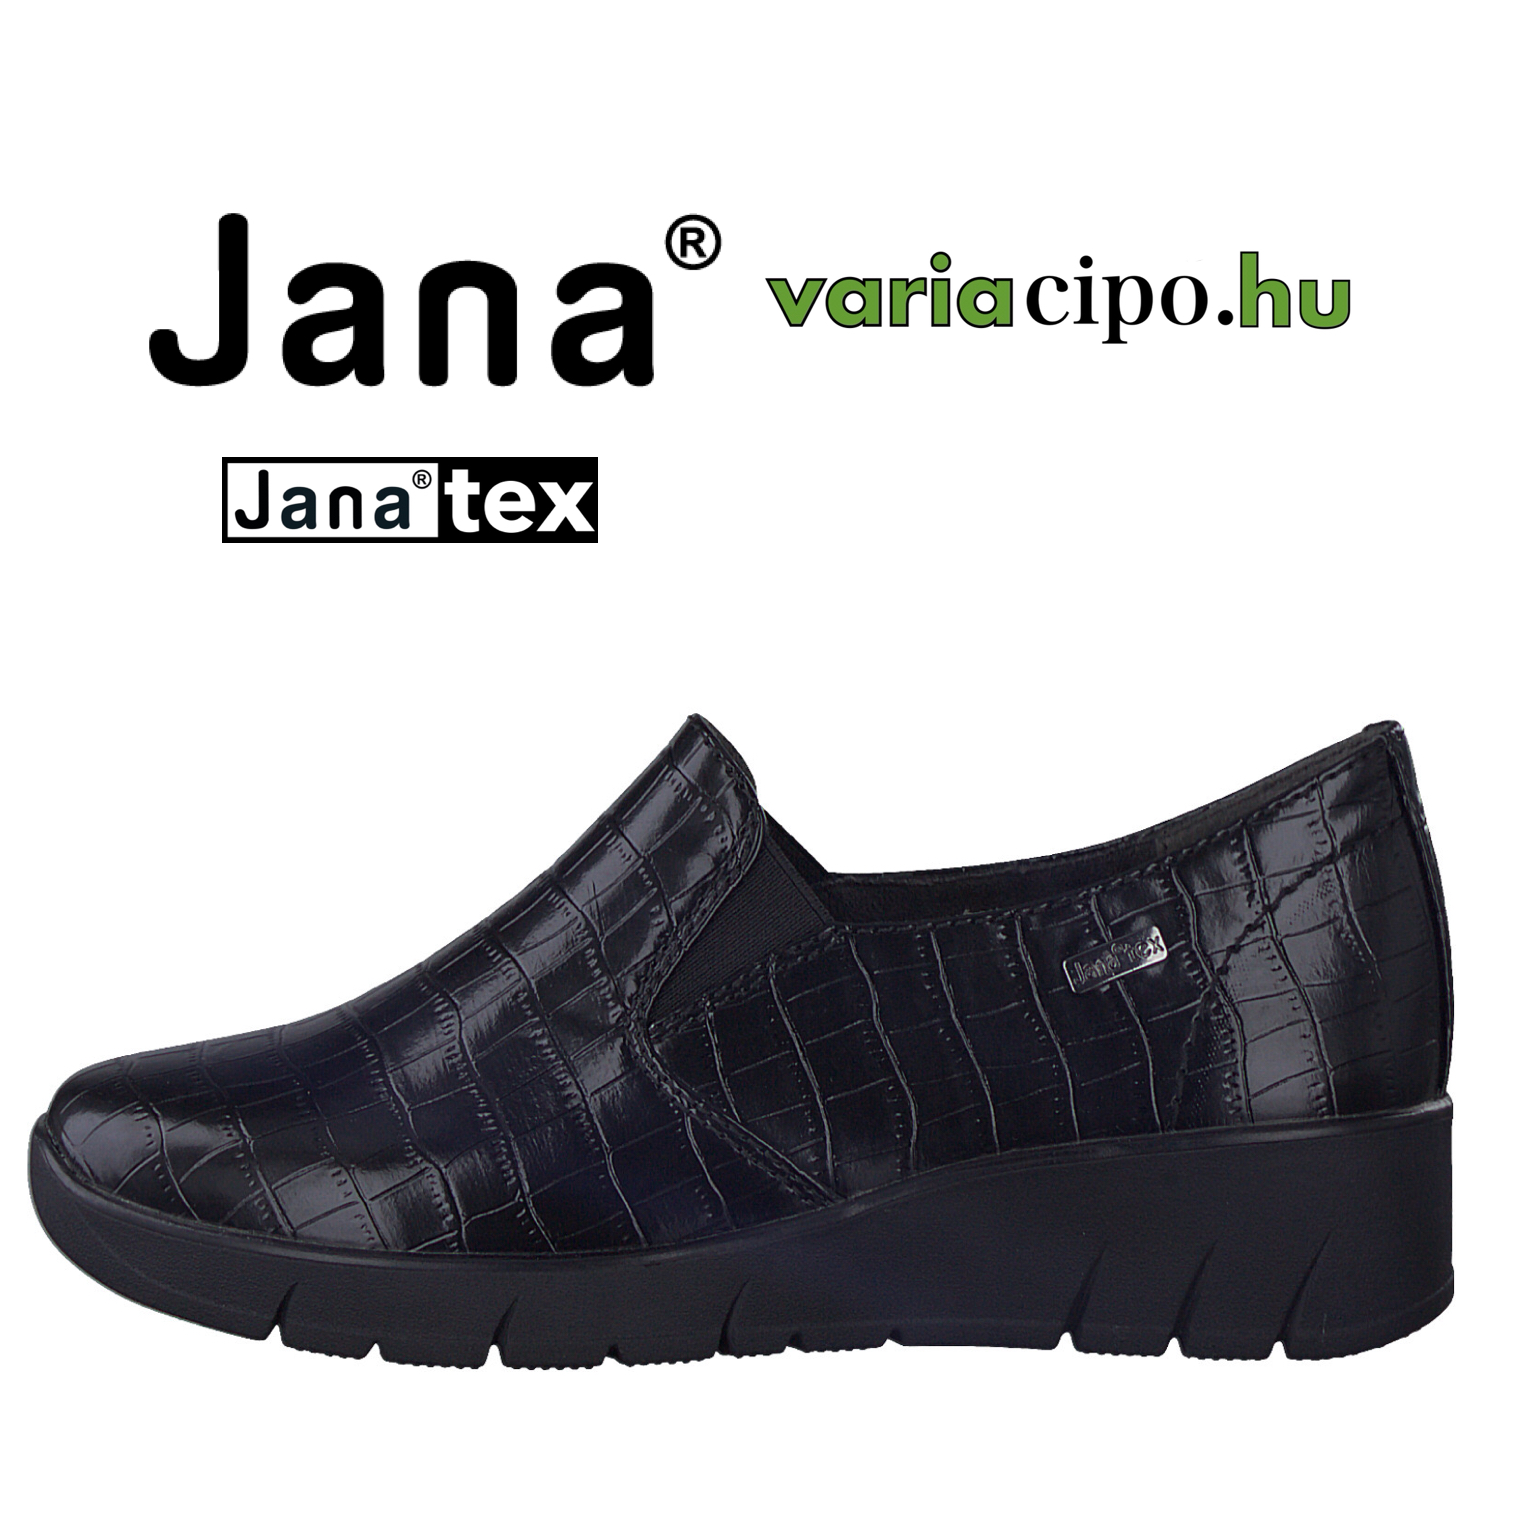 Jana Tex félcipő croco, 8-24662-41 091 black croco